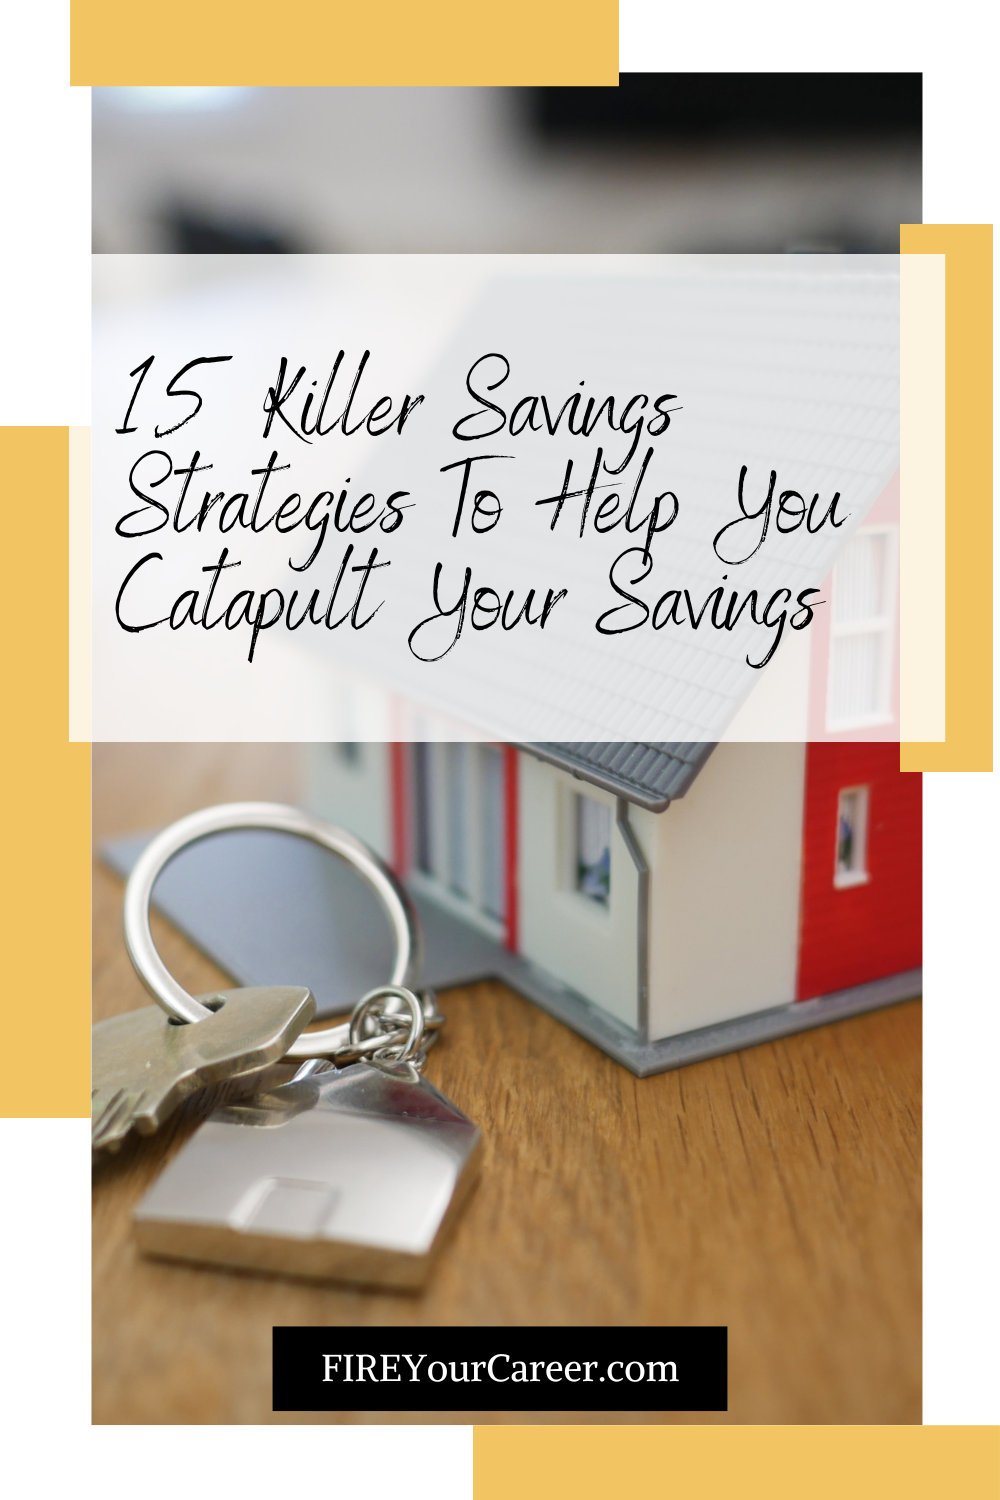 15 Killer Savings Strategies To Help You Catapult Your Savings